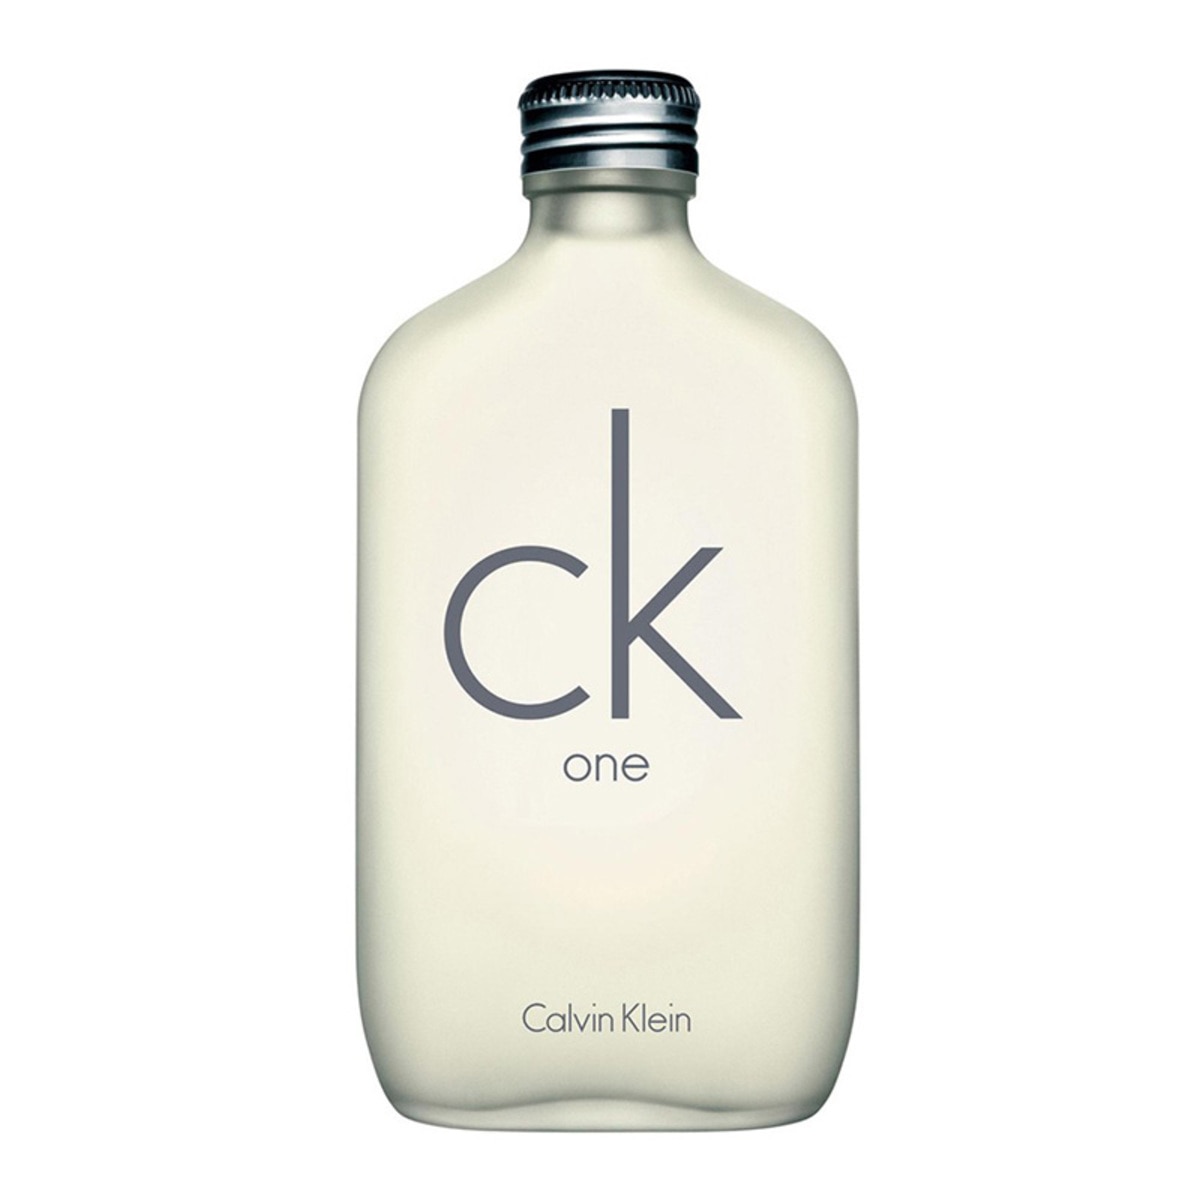 Calvin Klein One 100 ml